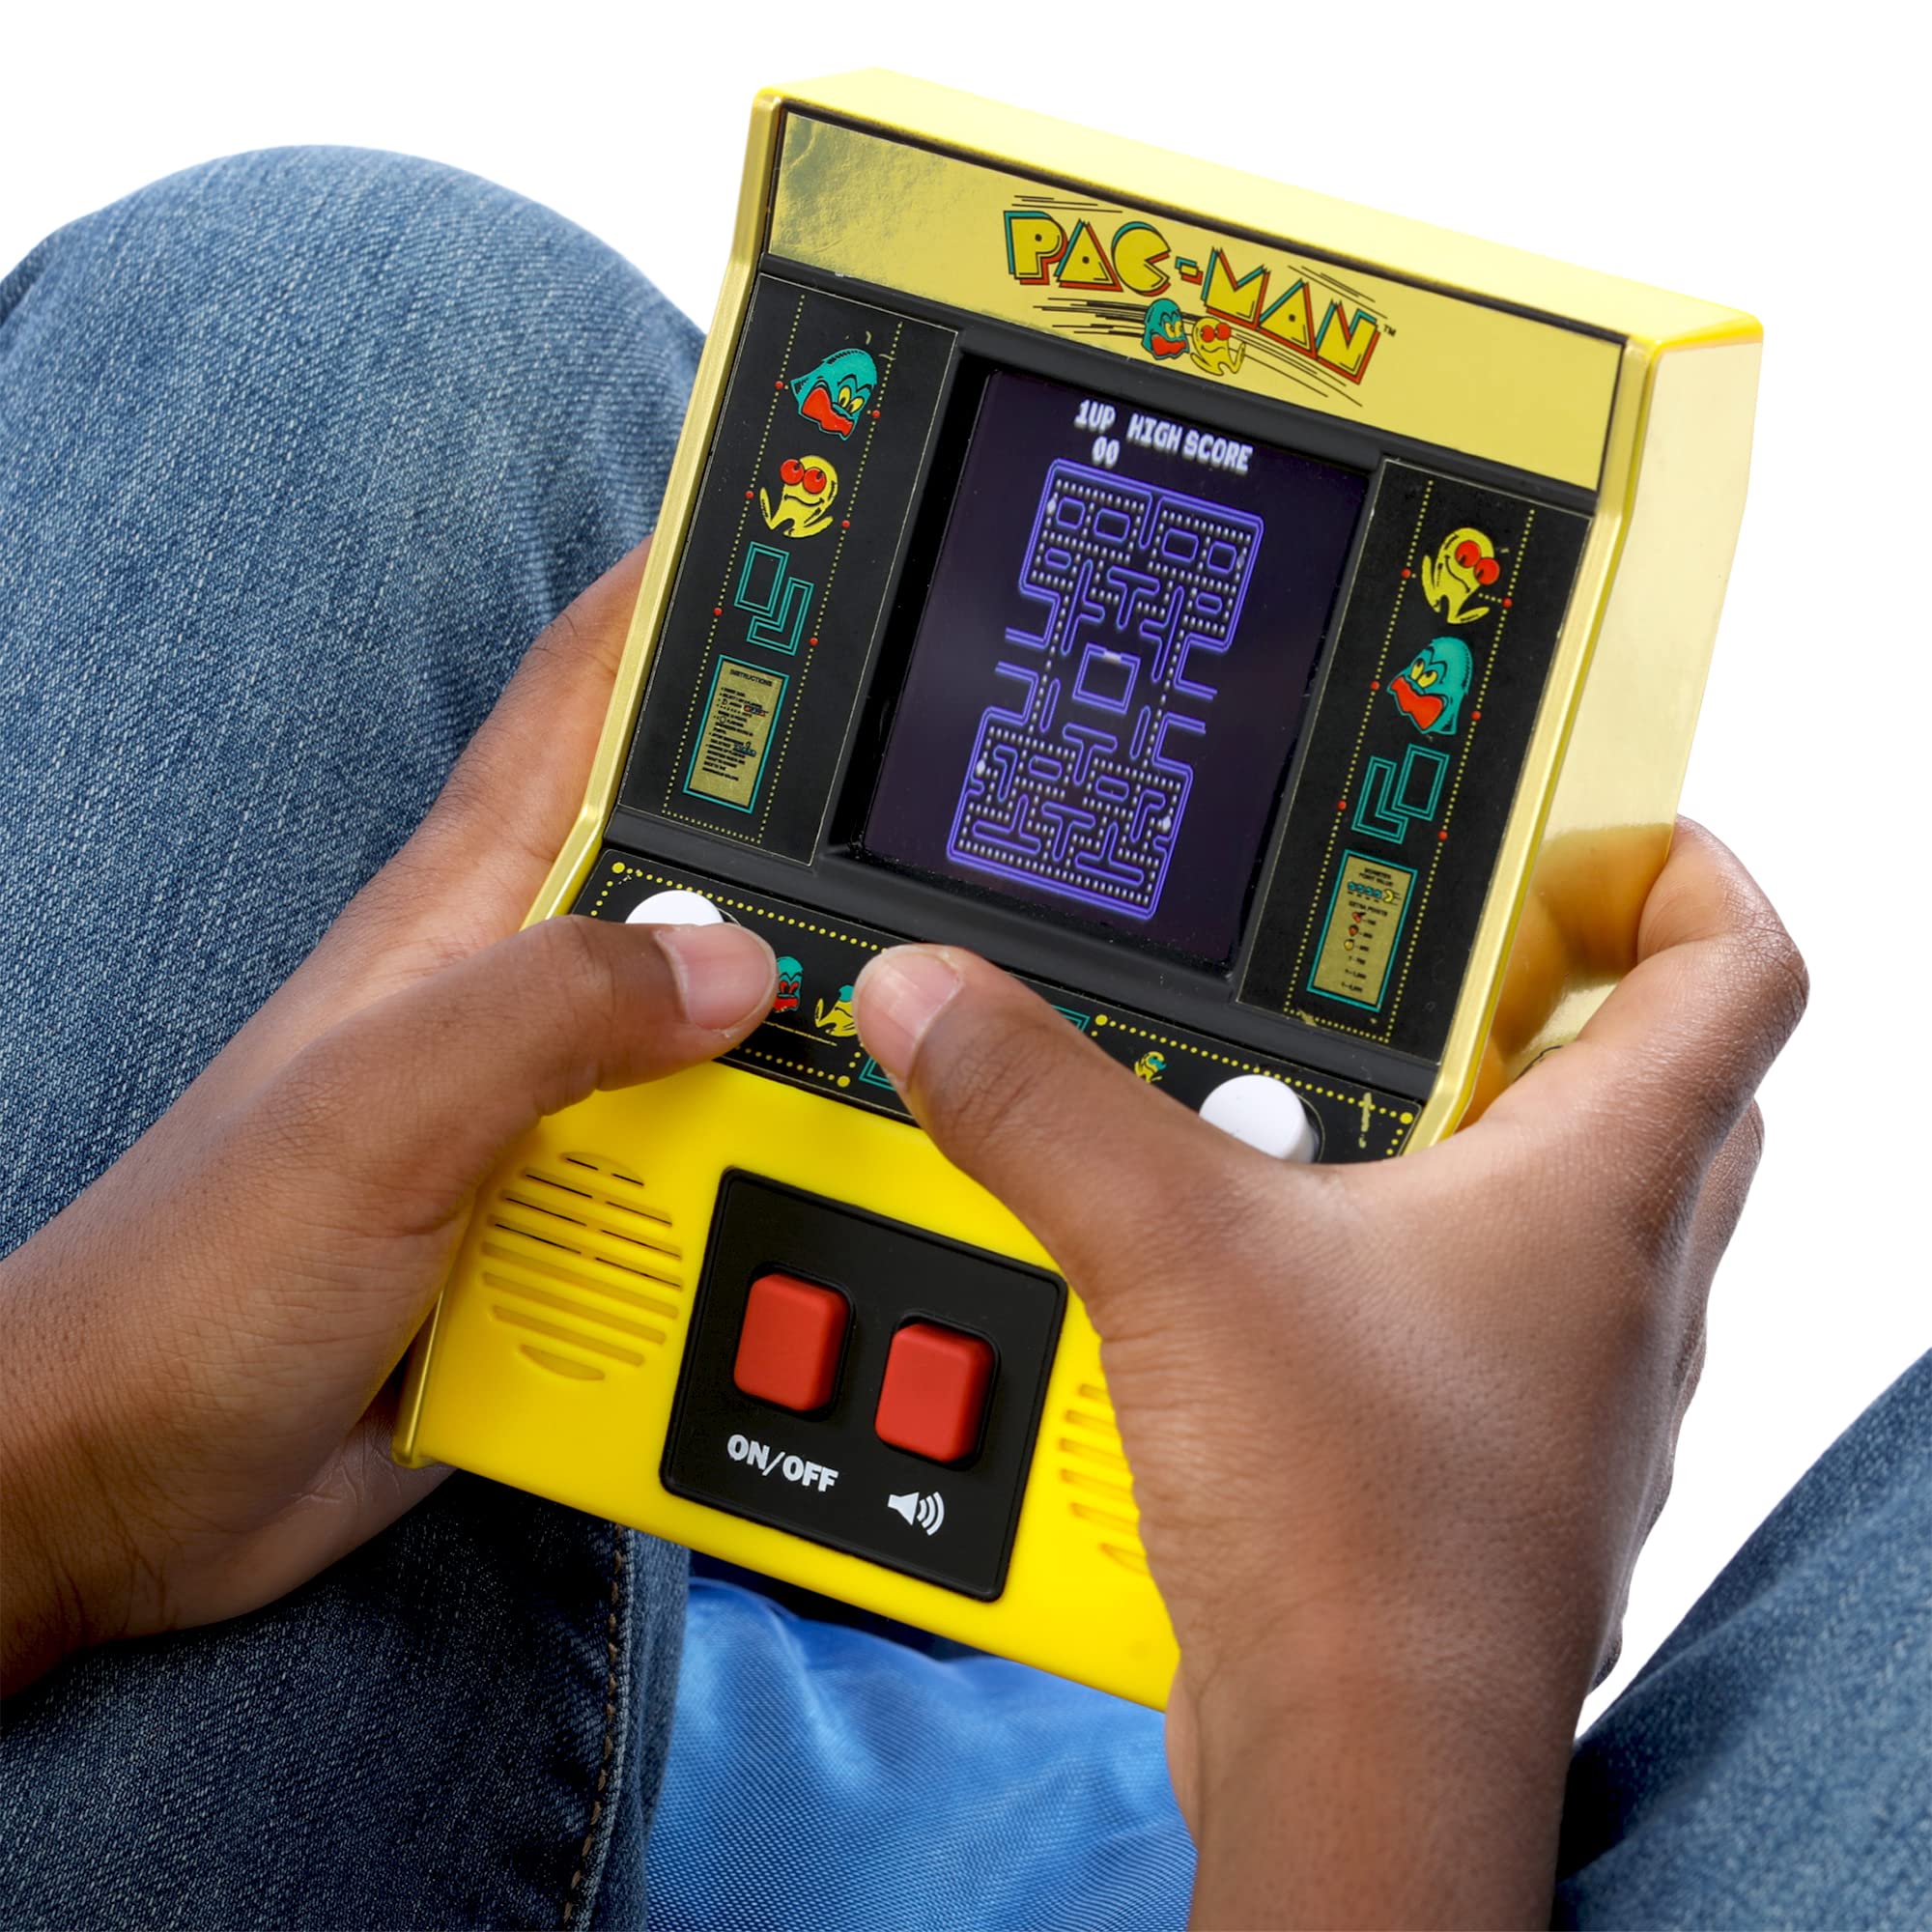 Basic Fun Arcade Classics - Pac-Man Color LCD Retro Mini Arcade Game , Yellow